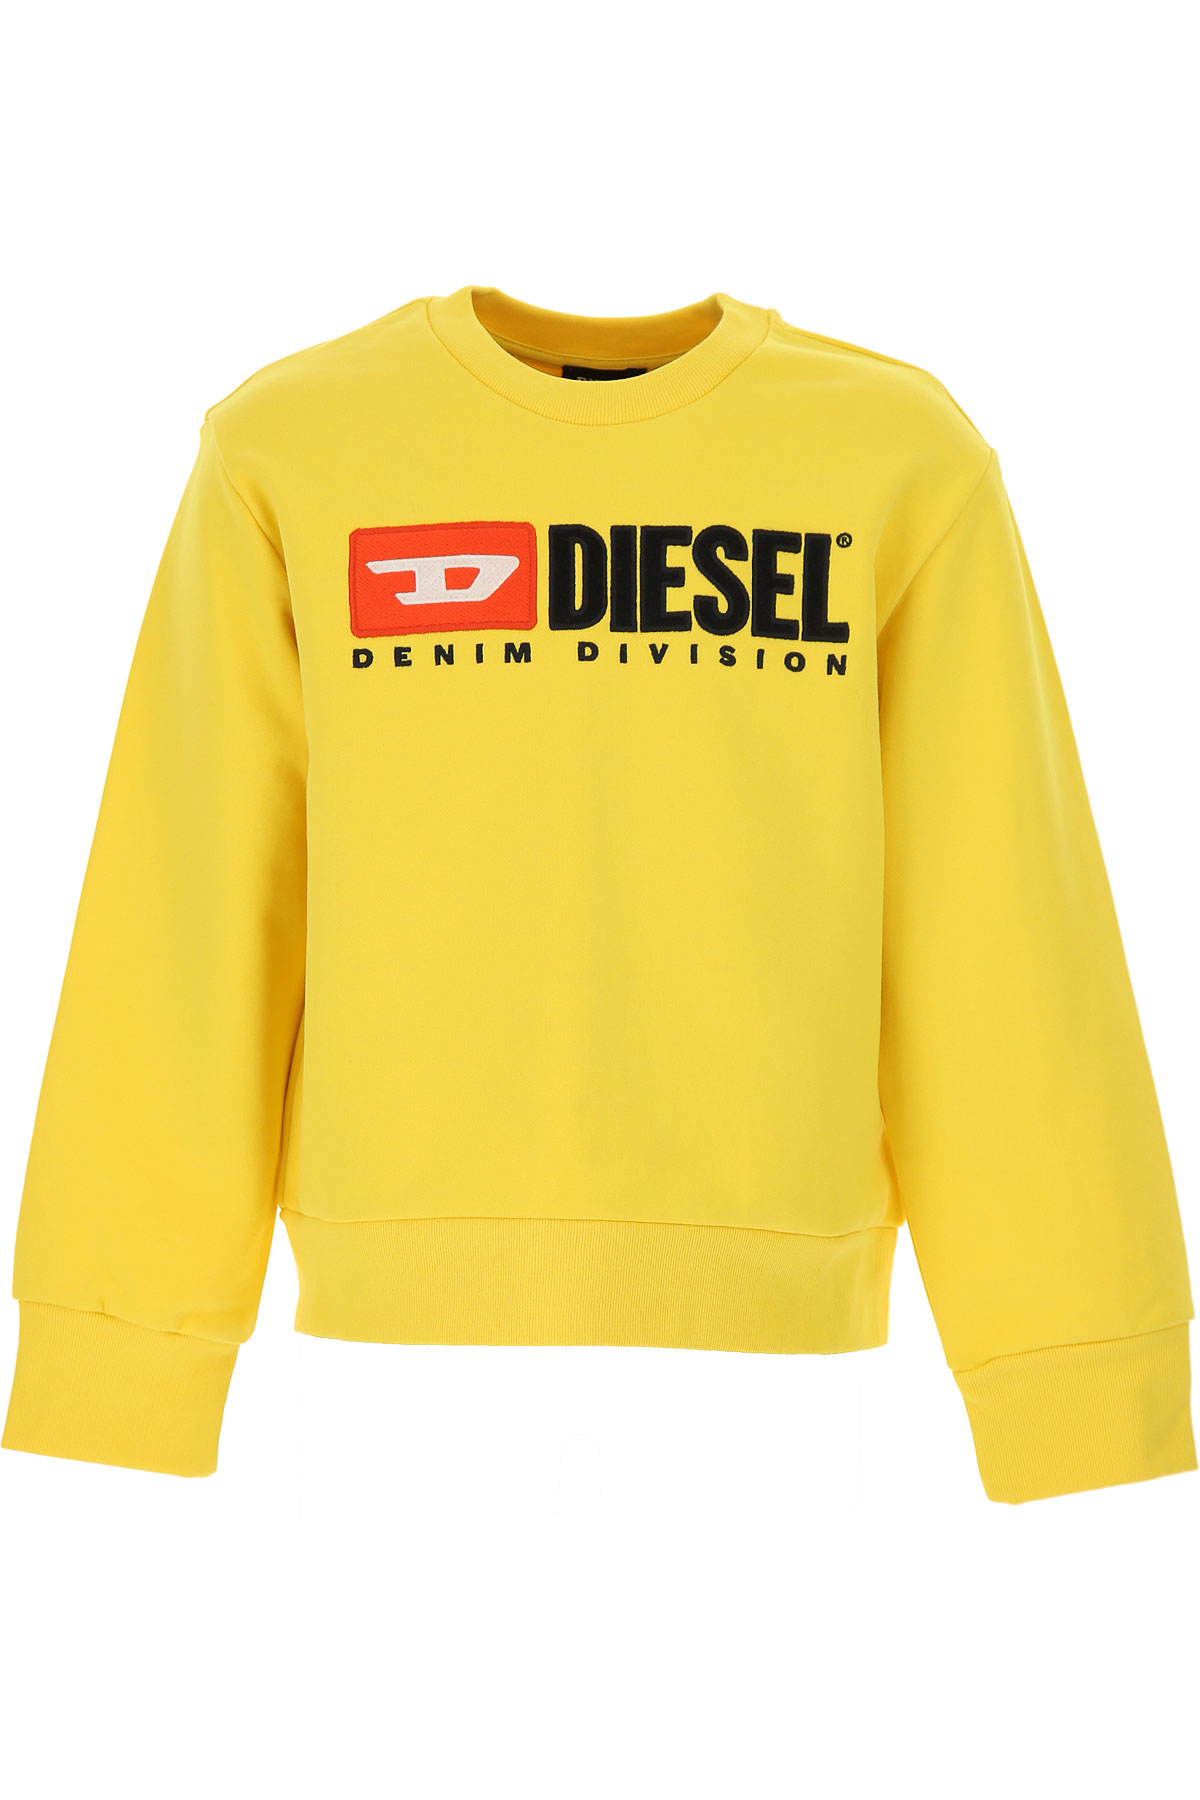 Diesel Kinder Sweatshirt & Kapuzenpullover für Jungen Günstig im Sale, Gelb, Baumwolle, 2017, 10Y 12Y 14Y 16Y 4Y 6Y 8Y